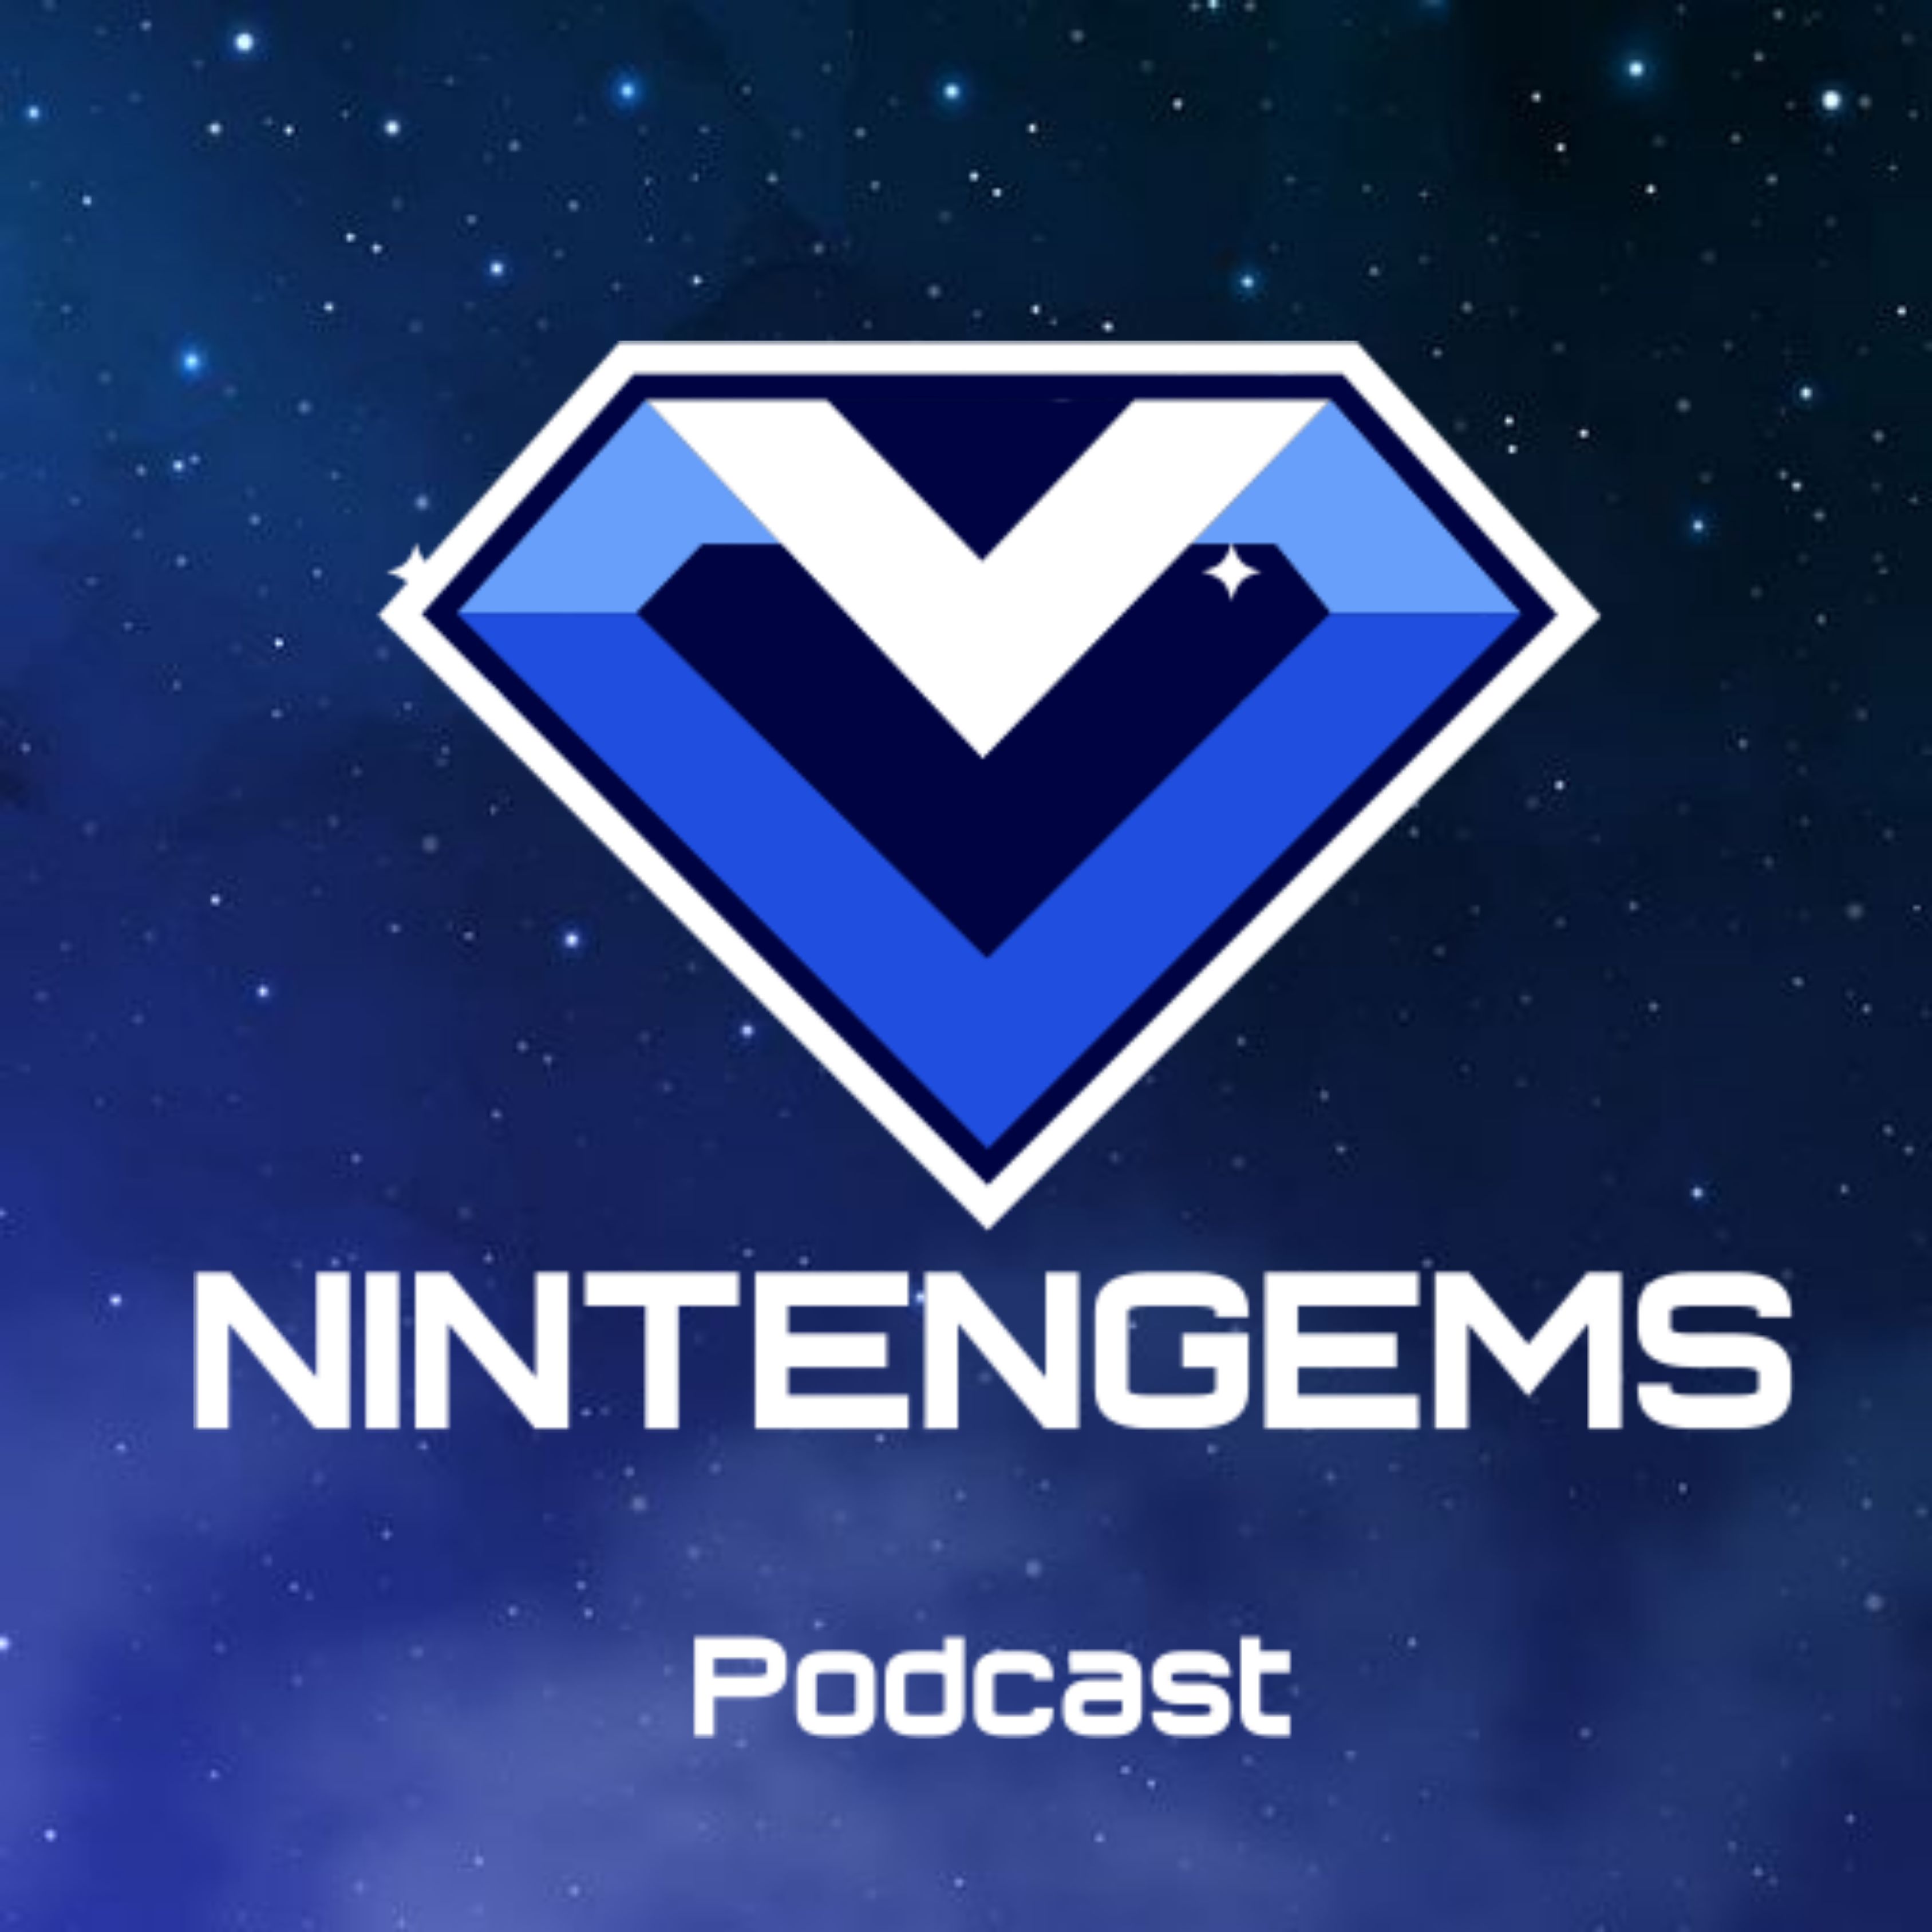 NintenGems Podcast - A Nintendo Analysis